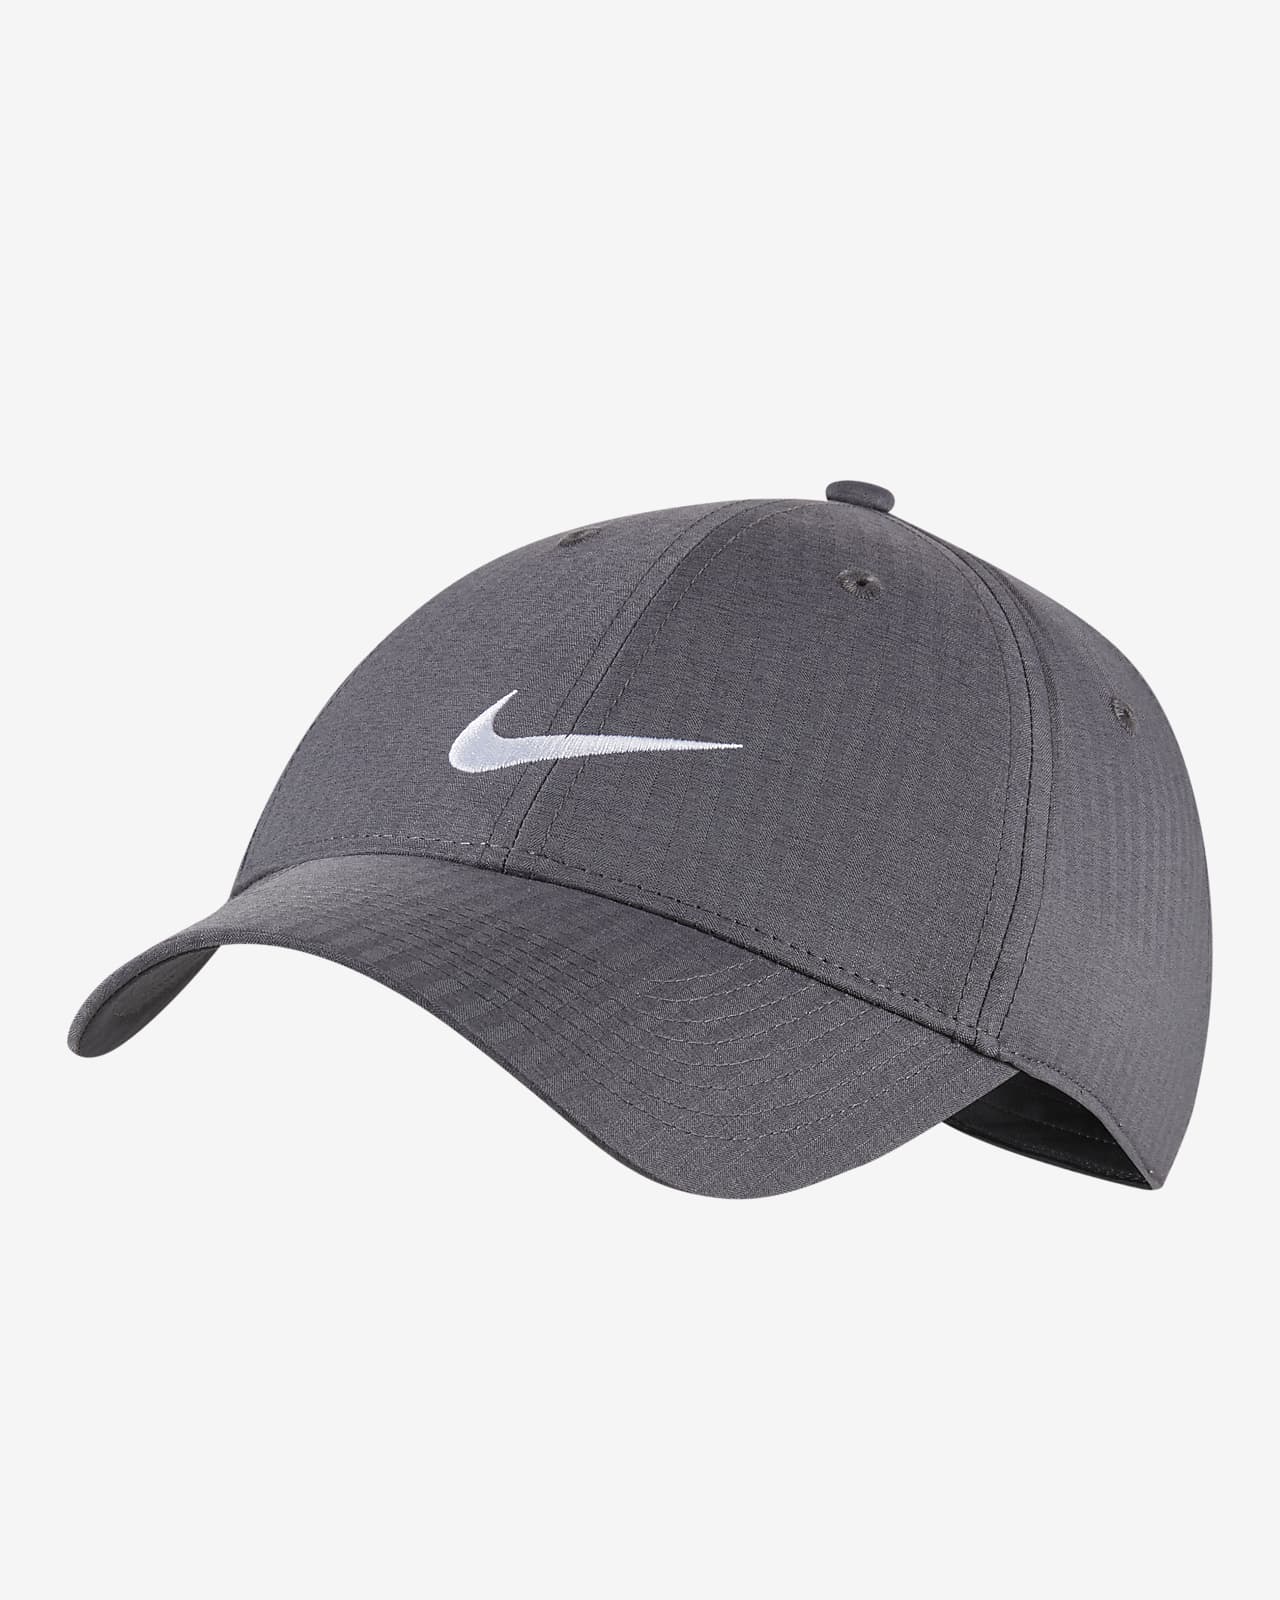 gray nike golf hat